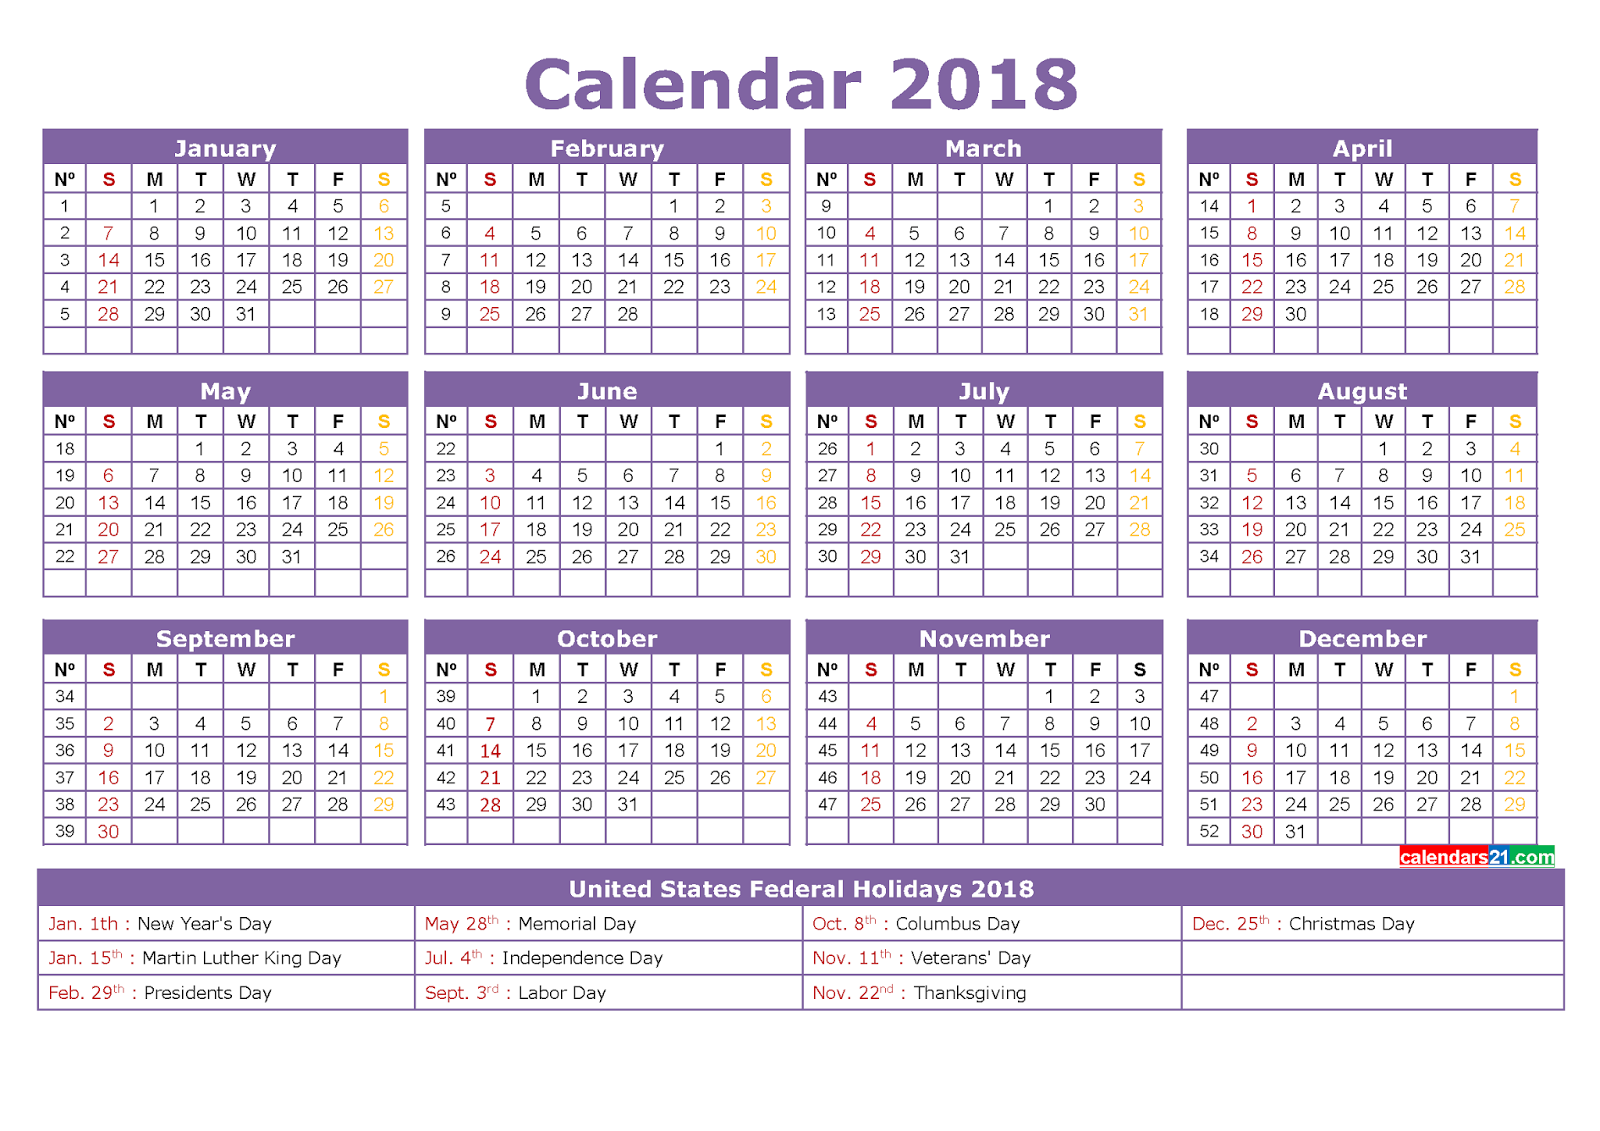 free-printable-calendar-2018